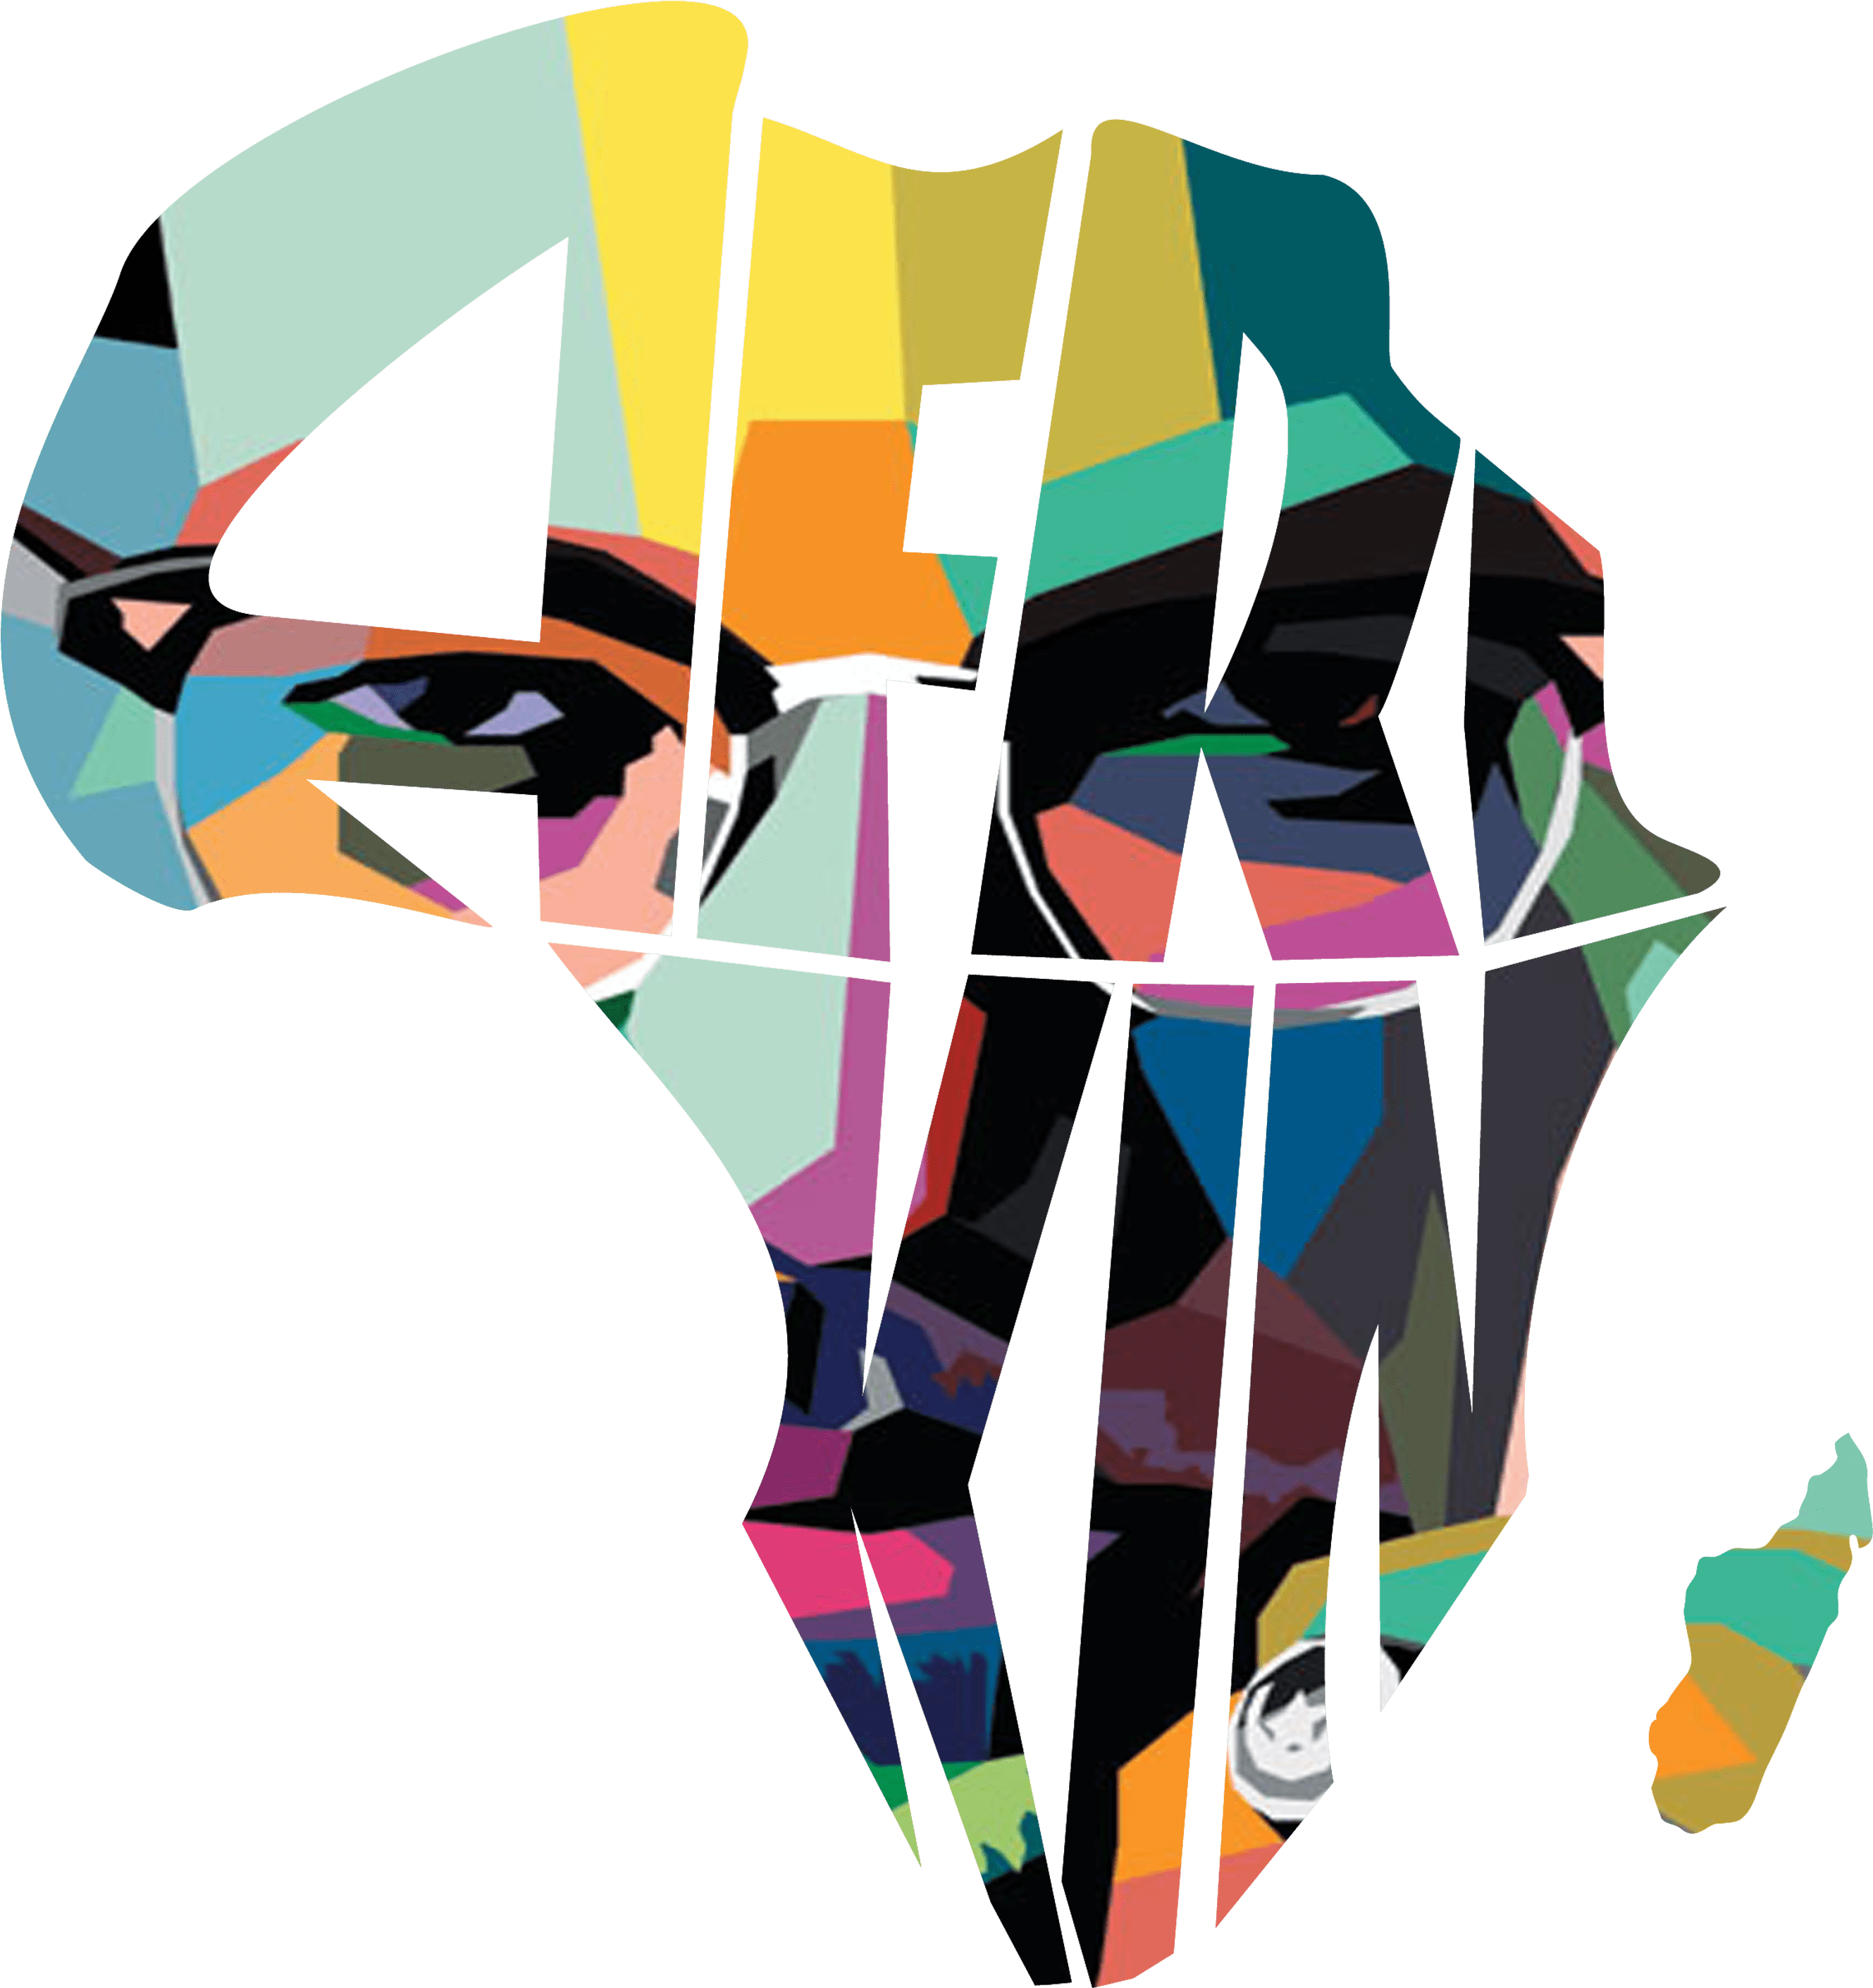 African Diaspora Art African American Black Is Beautiful - Malcolm X (3190x2832)